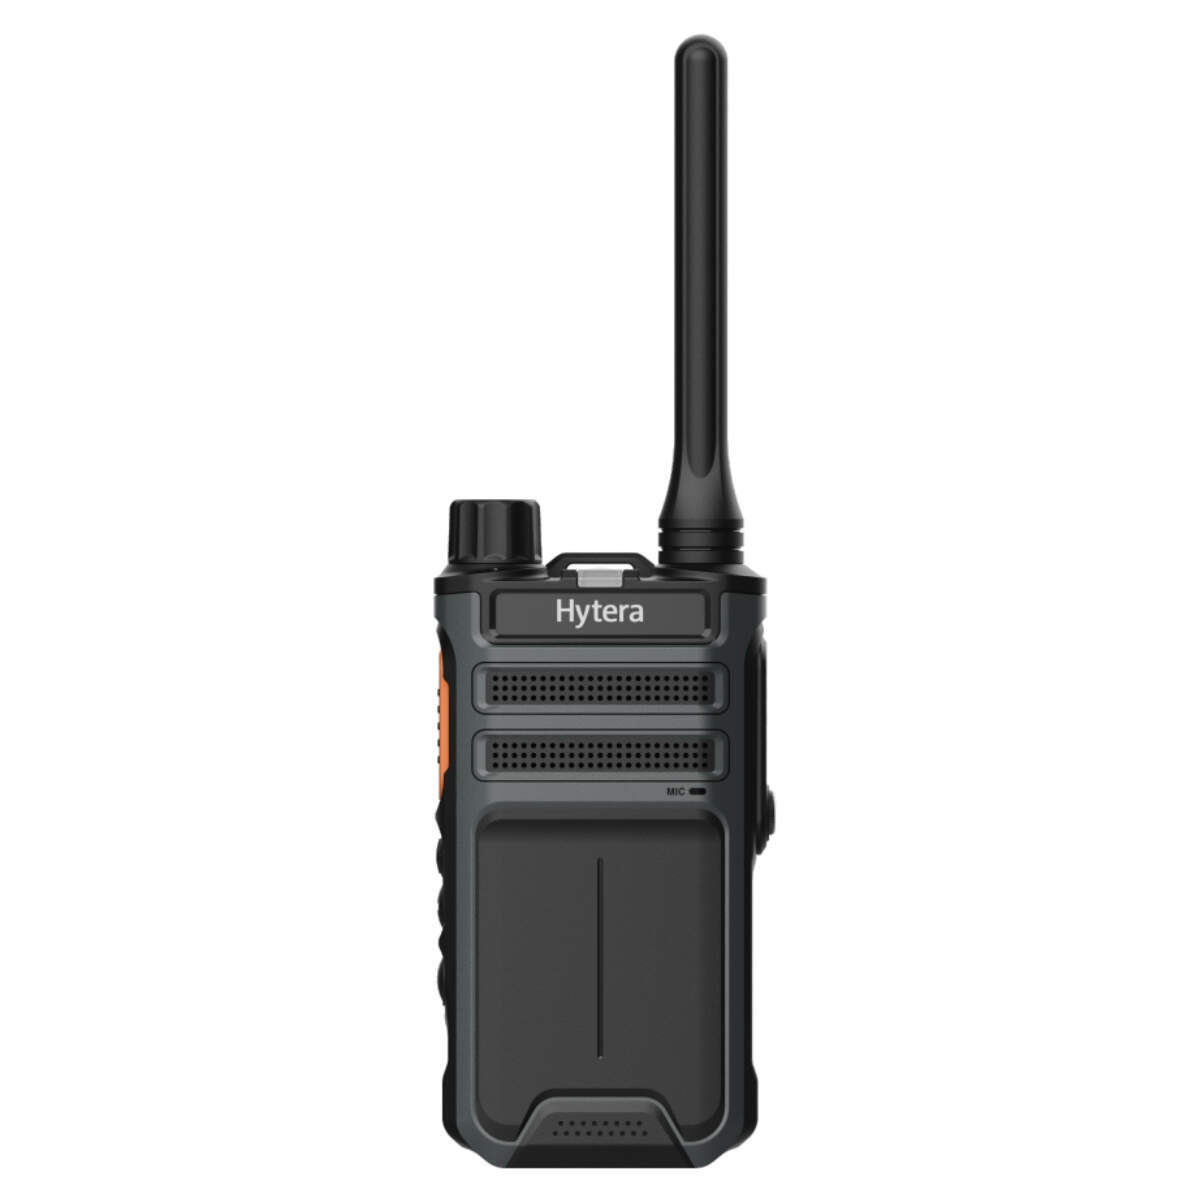 Set van 4 Hytera AP515LF + draagtas - Portofoons-walkies zonder licentie PMR446